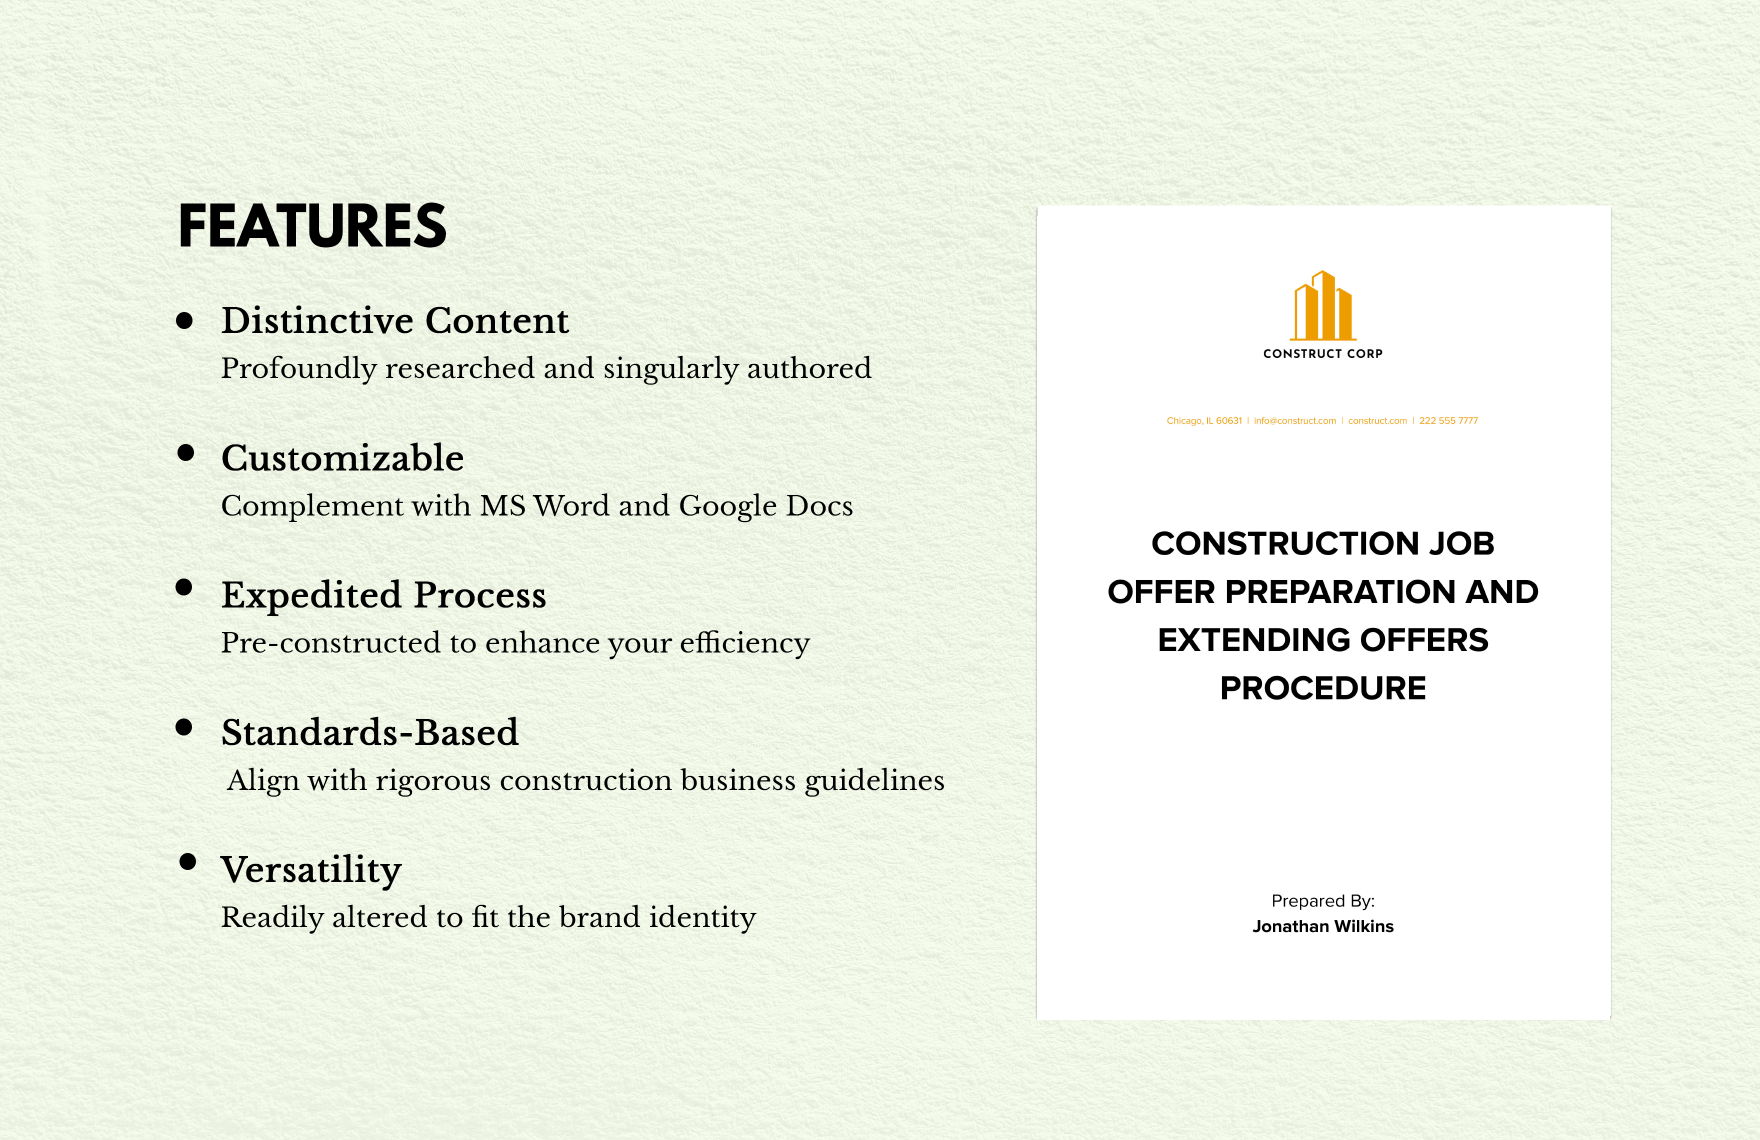 Construction Job Offer Preparation and Extending Offers Procedure 